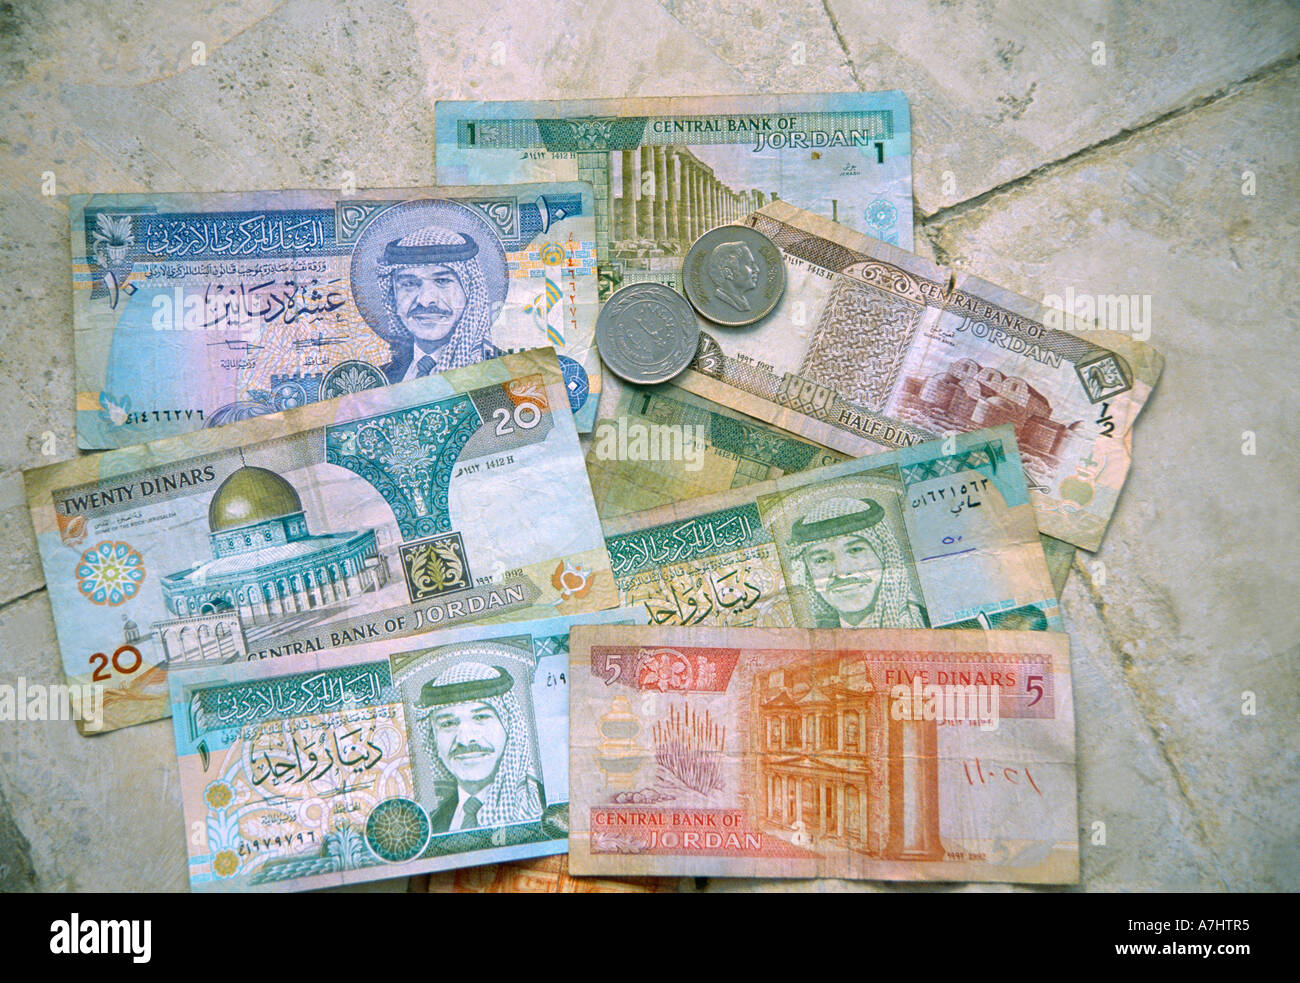 Jordan Currency Immagini e Fotos Stock - Alamy